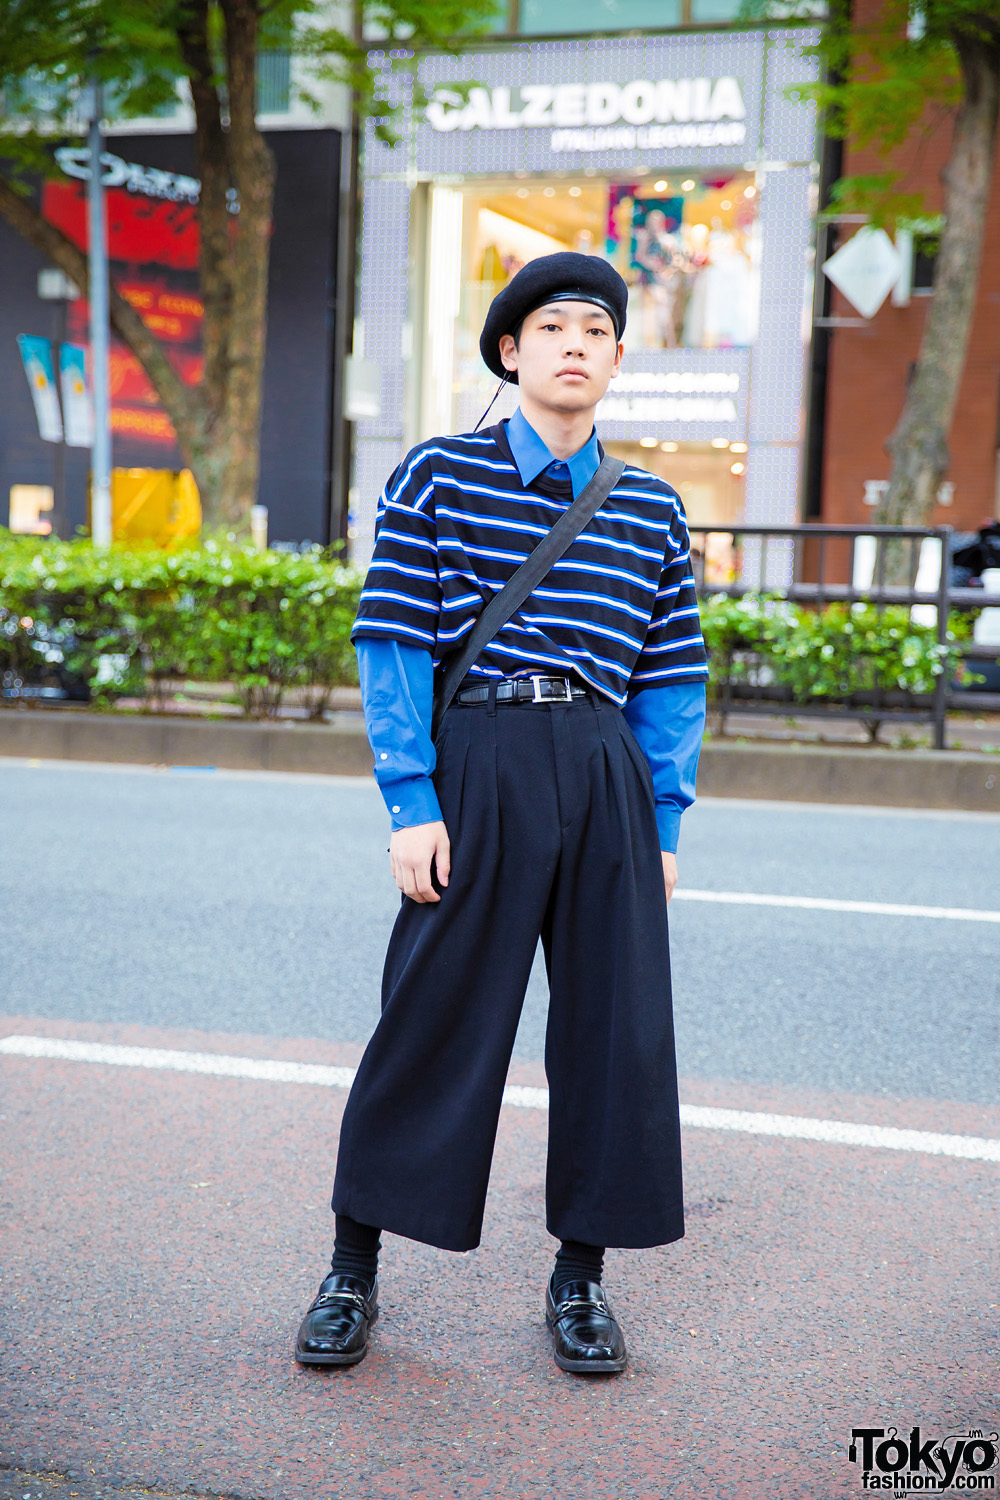 Parisian-Inspired Harajuku Street Style w/ Black Beret, Van Heusen Striped Top, JW Anderson Pants & Porter Bag